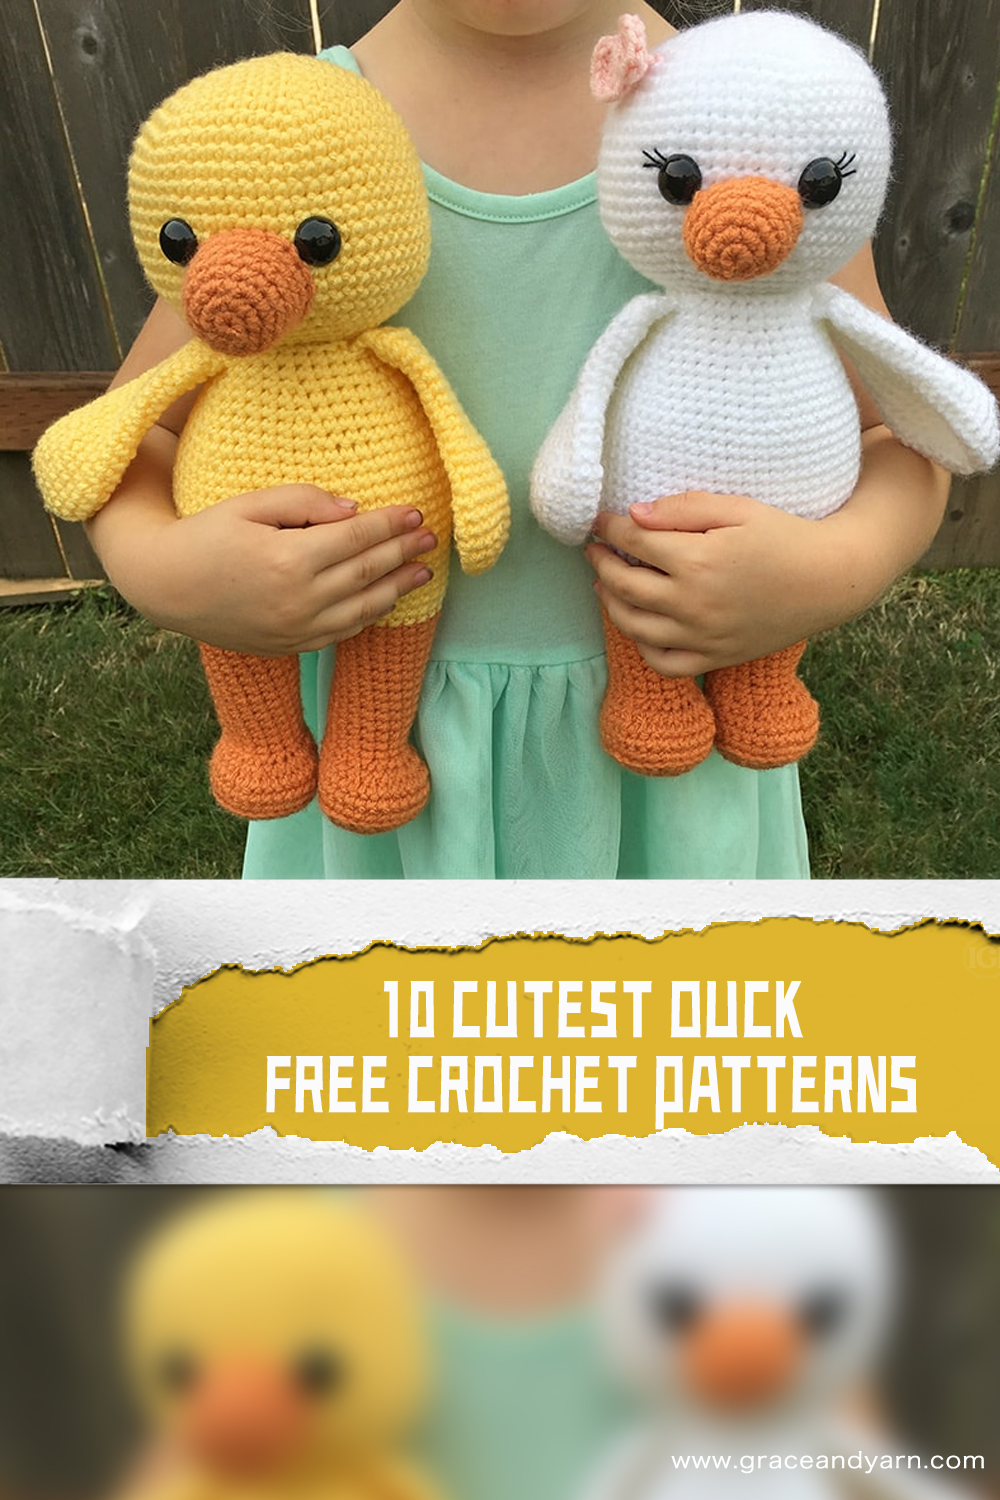 DUCK AMIGURUMI FREE Crochet Pattern